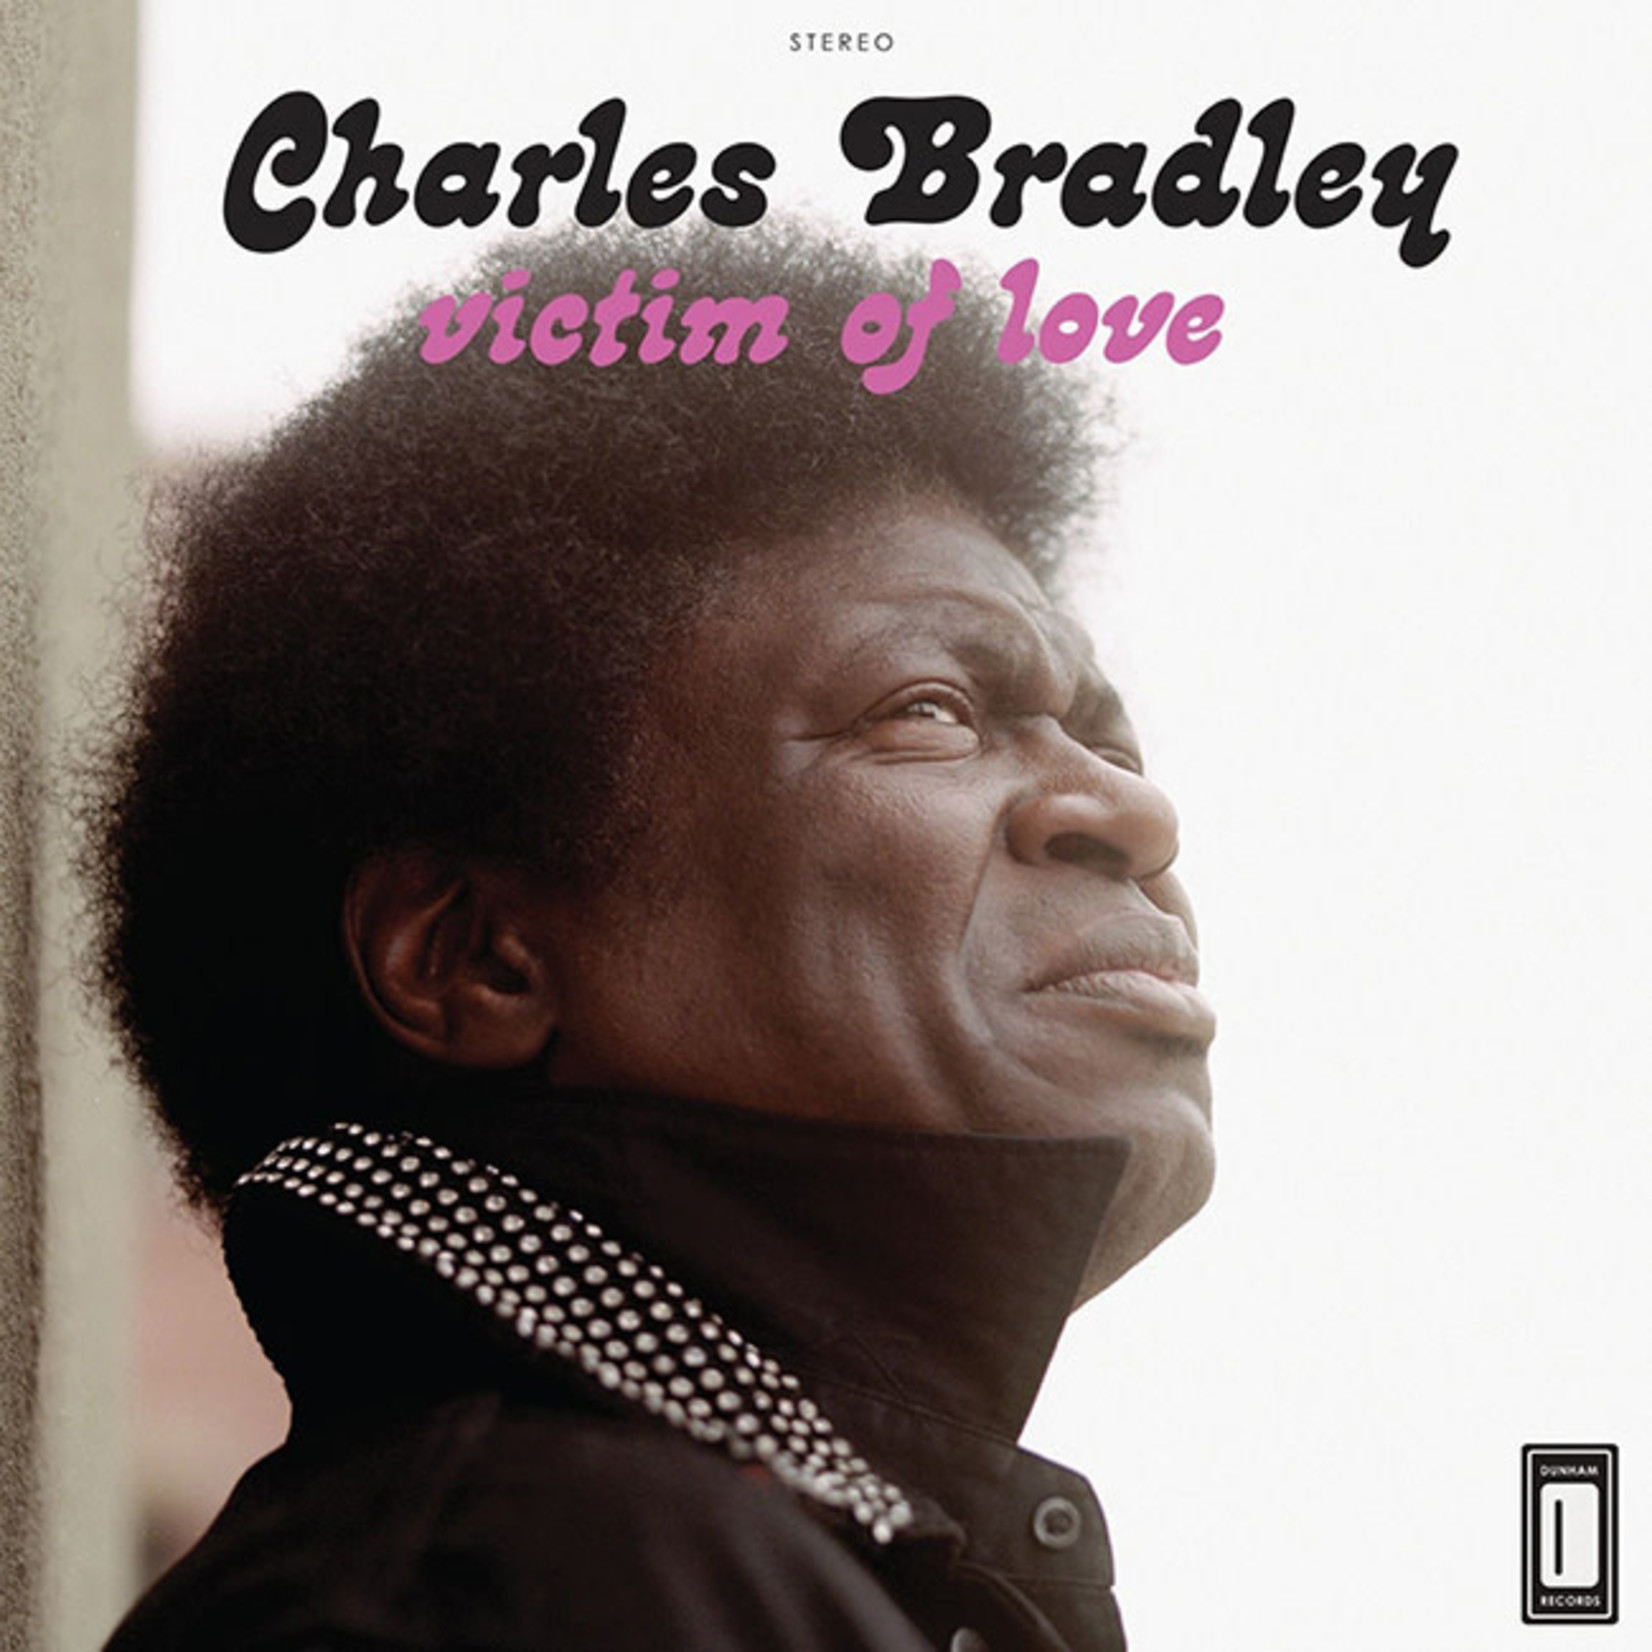 [New] Charles Bradley - Victim of Love